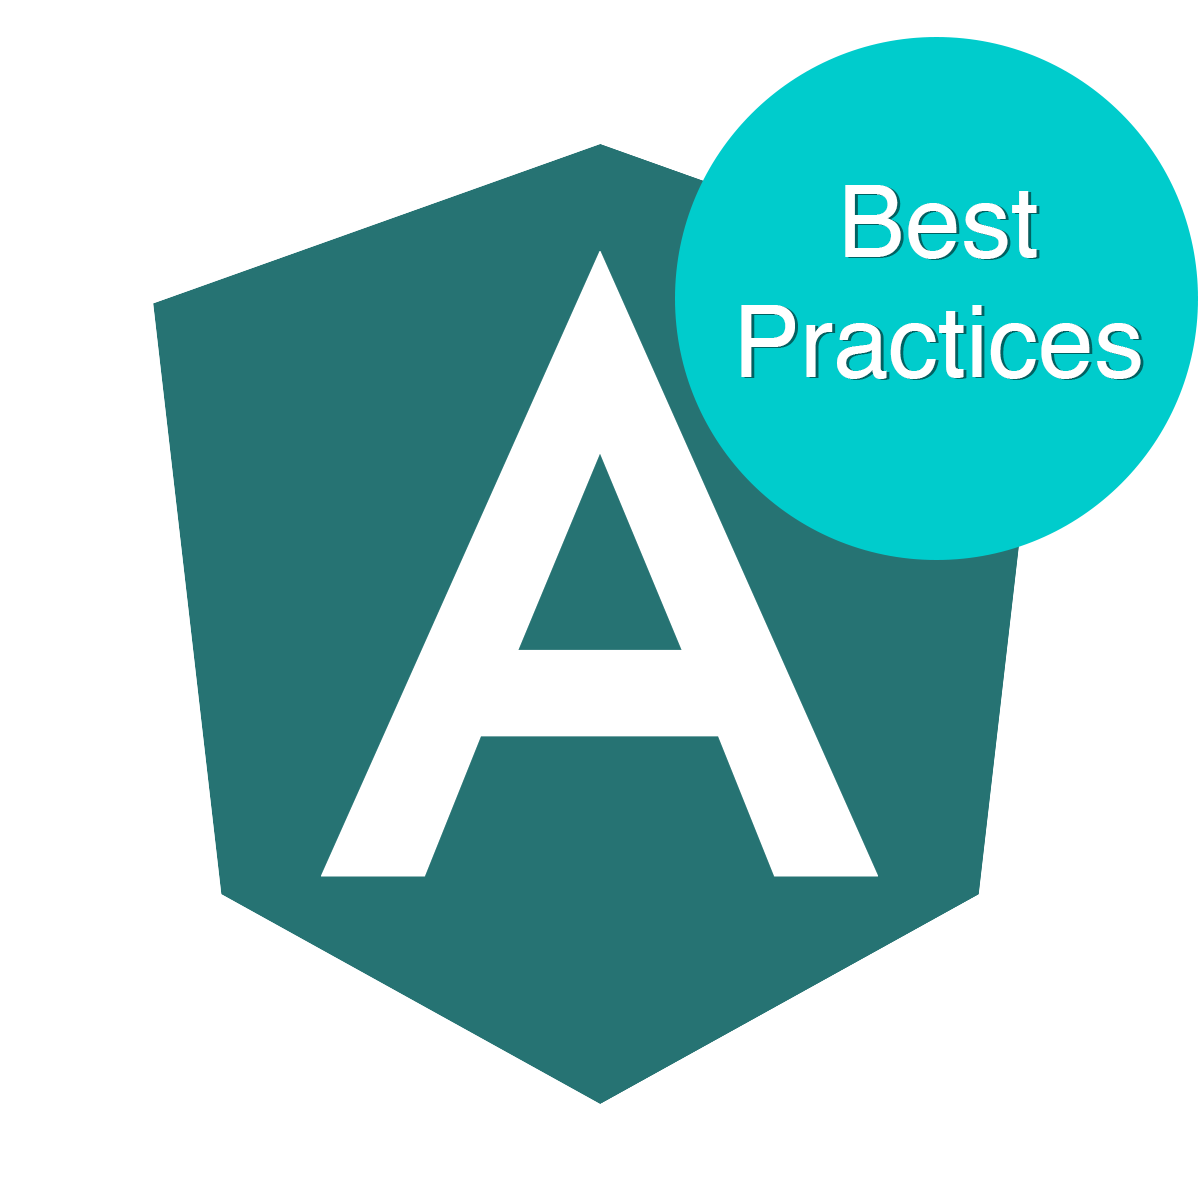 Angular Best Practices training